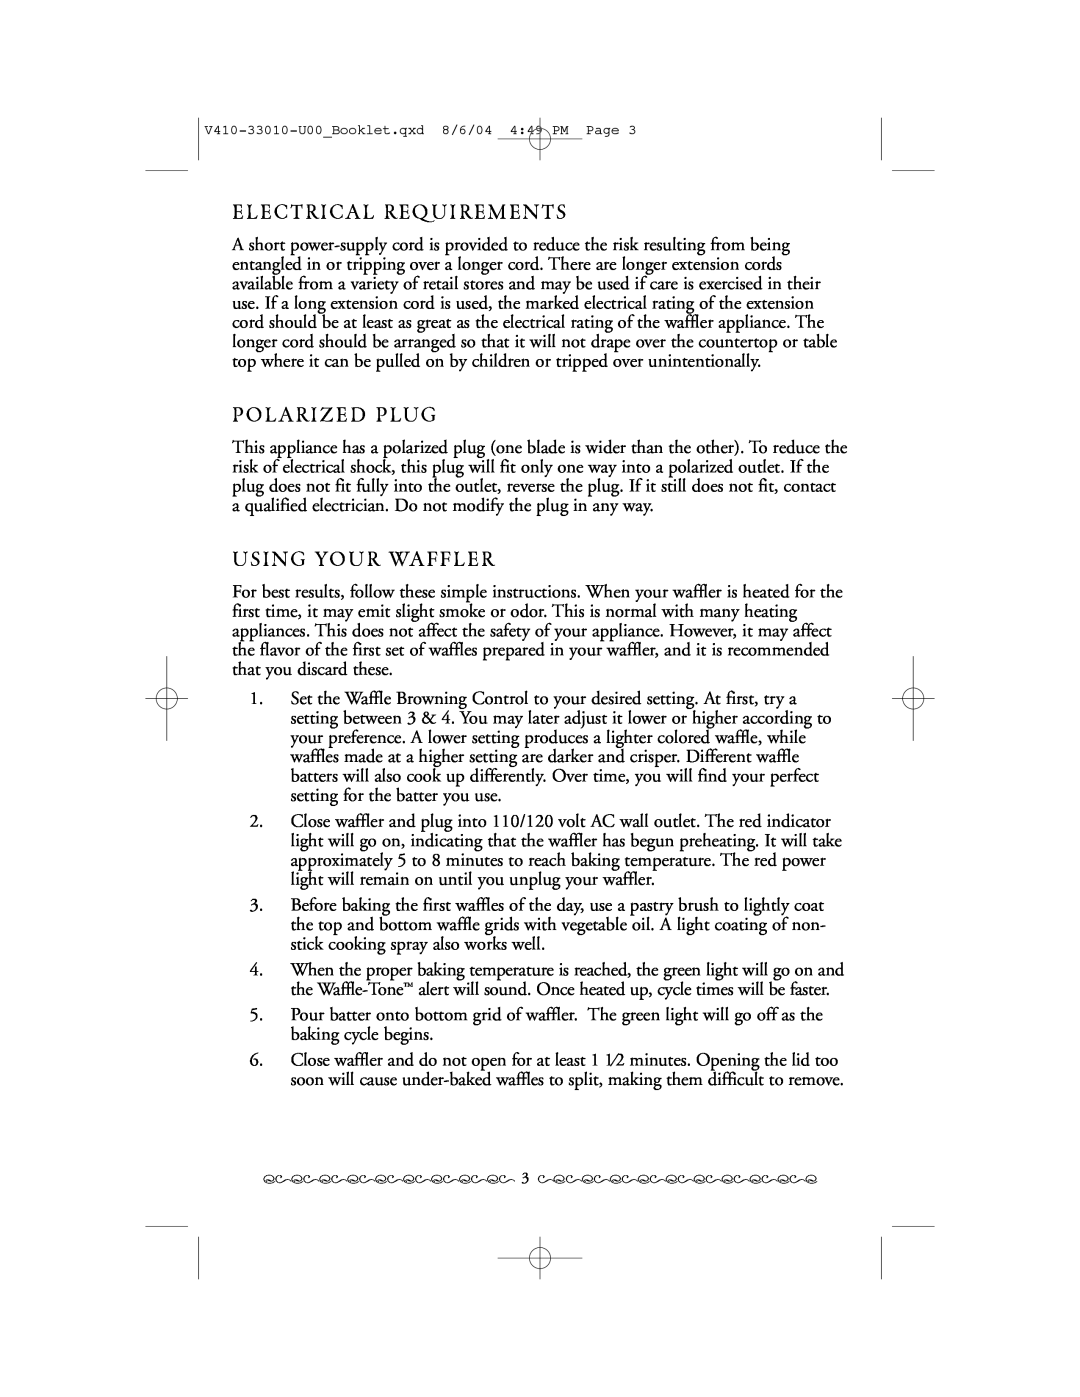 Villaware ROSE BOUQUET WAFFLER manual Elec Trical Requirements 